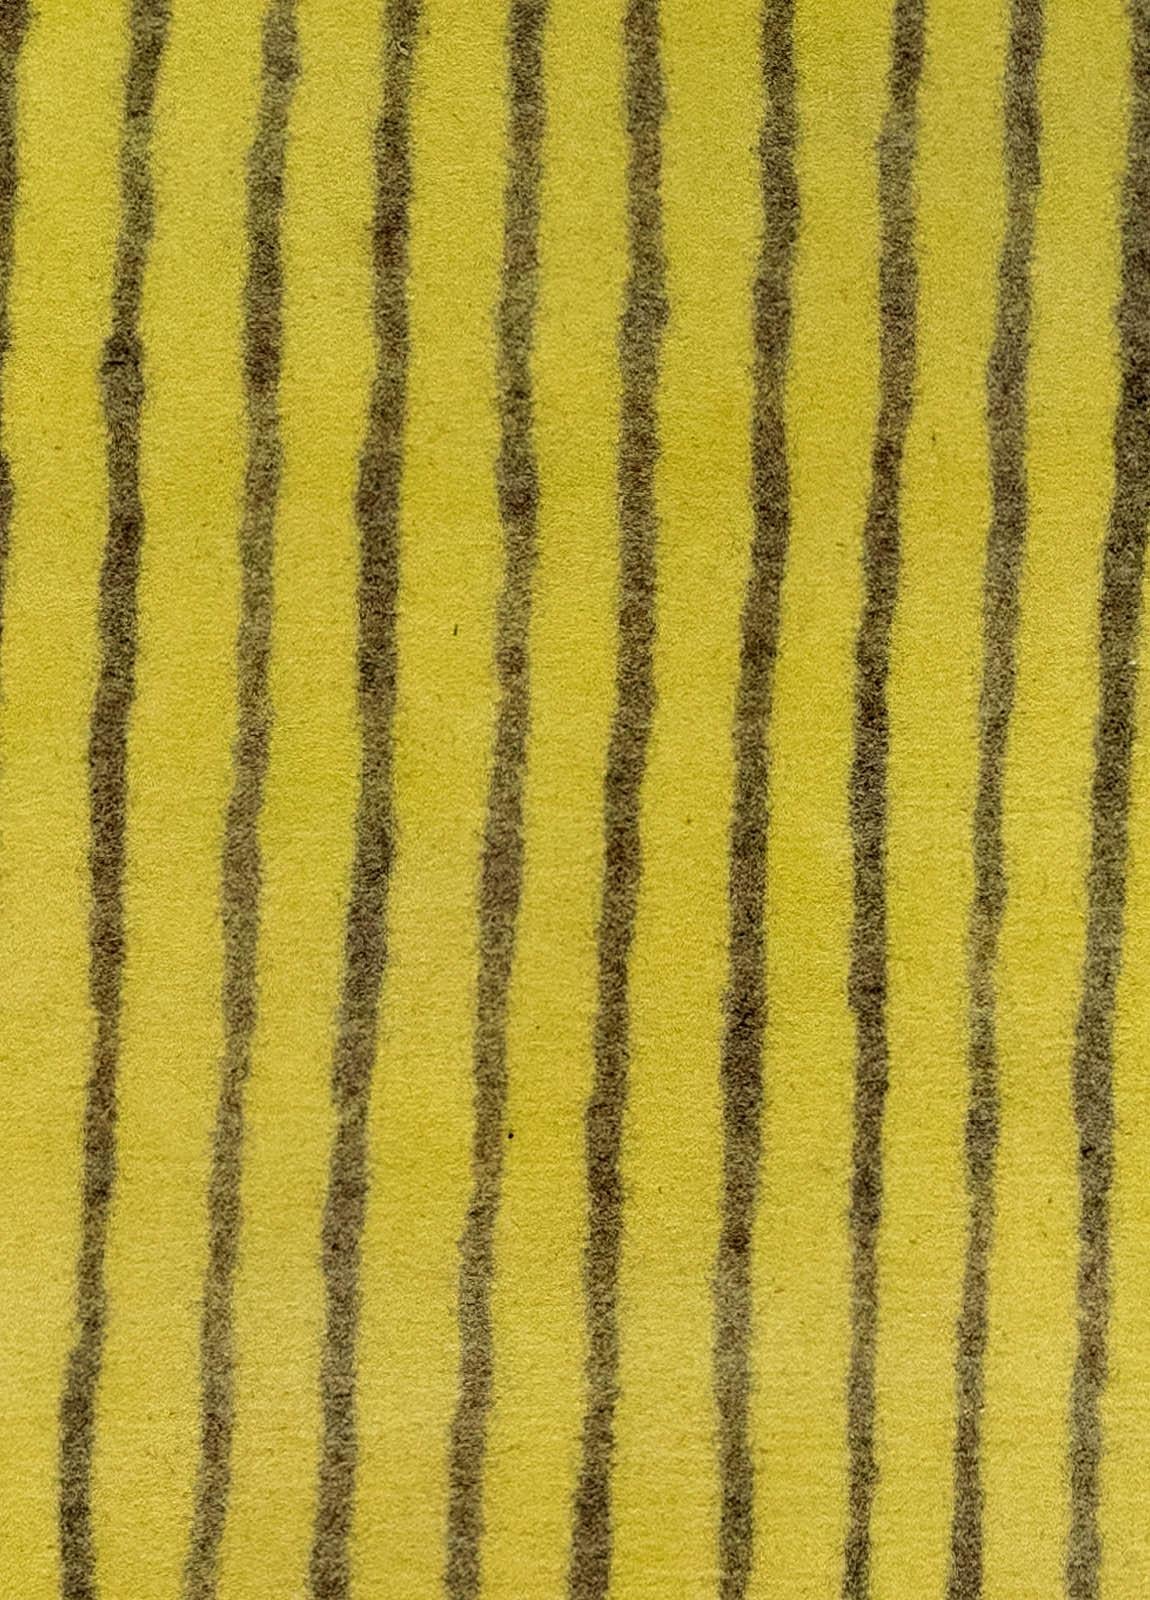 Modern striped yellow black hand knotted felt rug by Doris Leslie Blau.
Size: 8'1